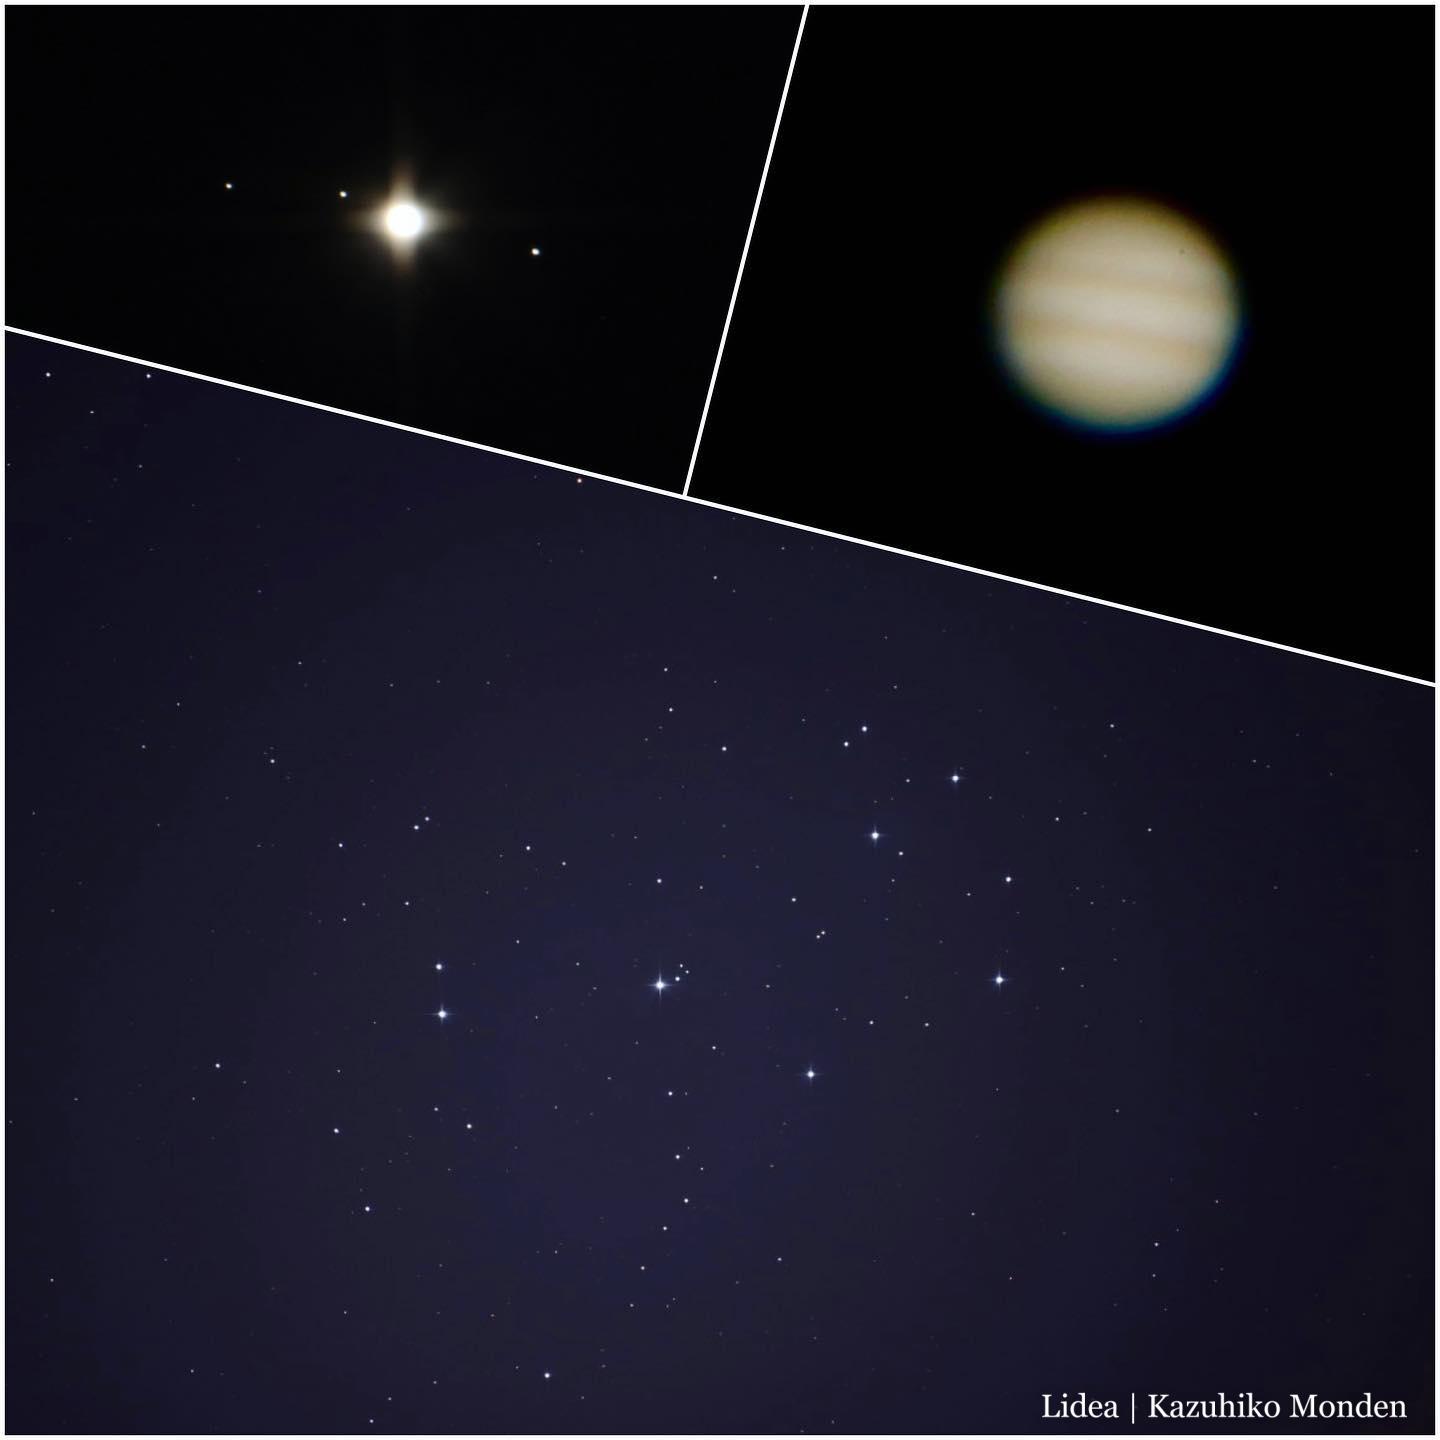 Jupiter & Pleiades 木星とプレアデス星団（すばる）やっと夜の気温が落ち着いて、ベランダで望遠鏡を覗けるようになった。久々。